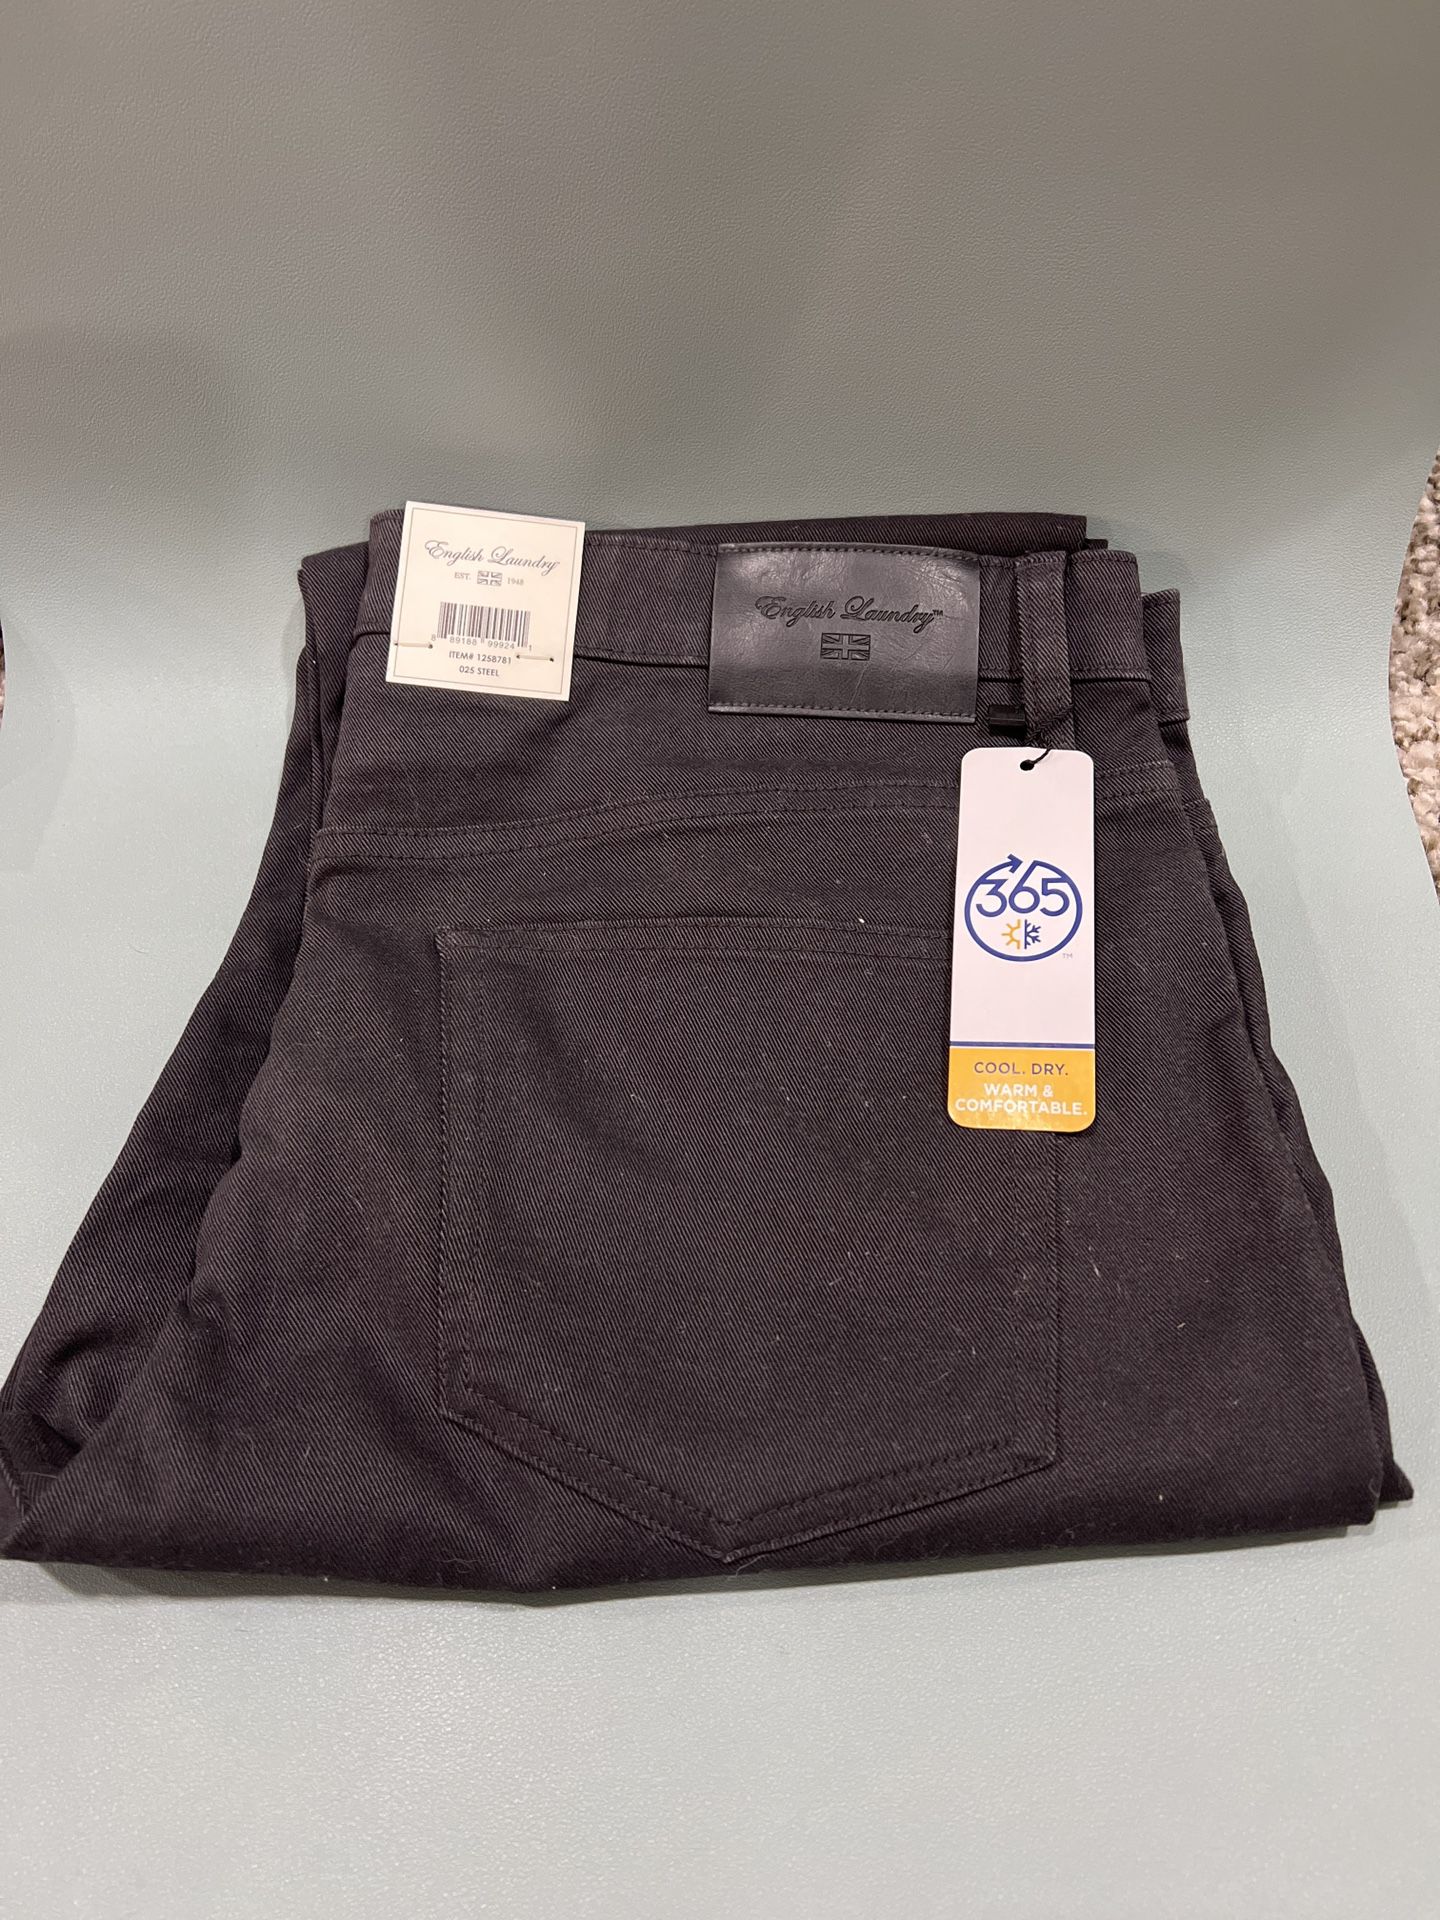 Brand New Men’s English Laundry Pants Size 34x34